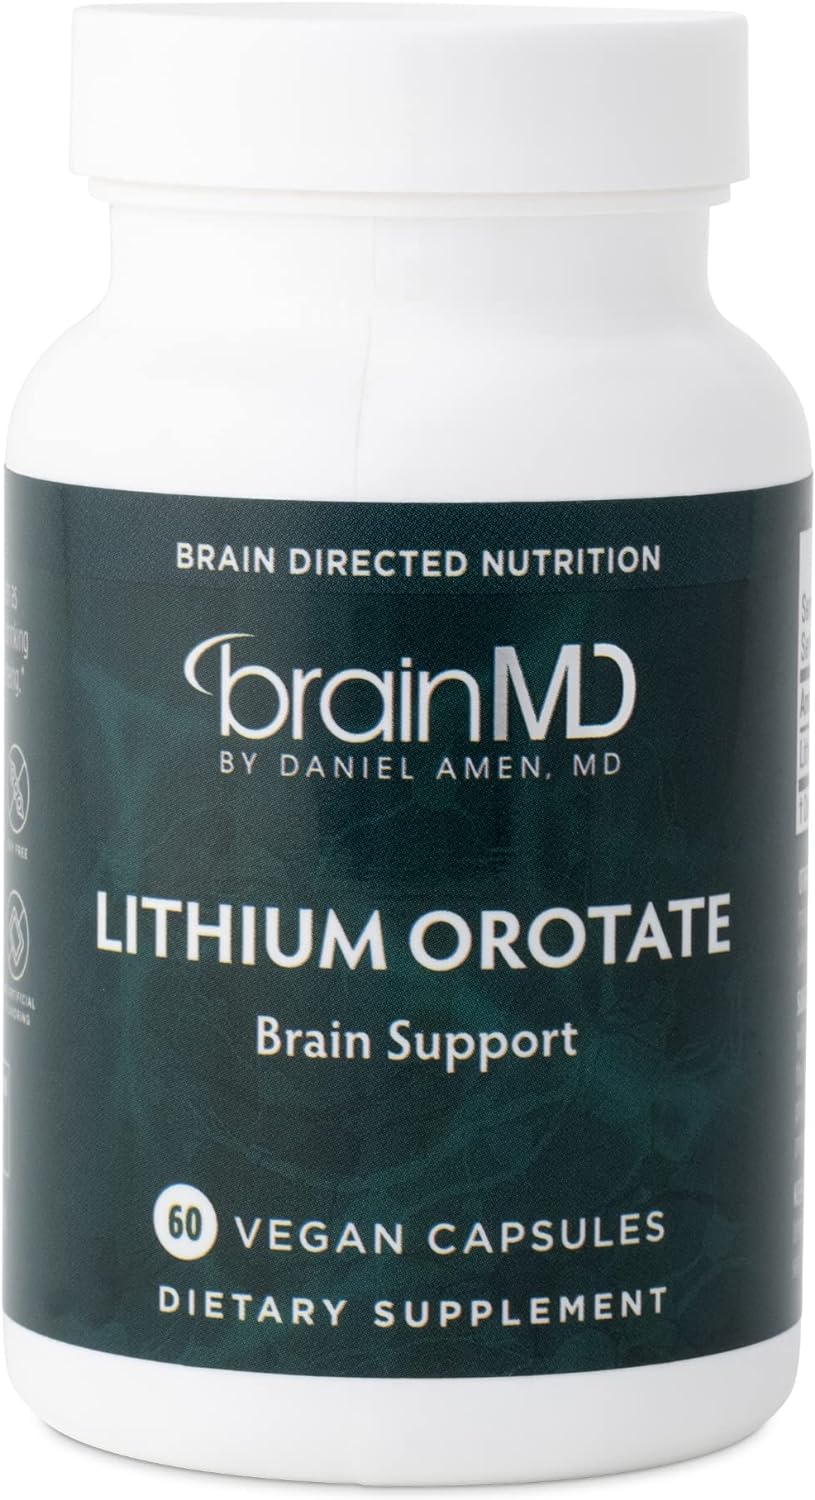 Dr Amen BrainMD Lithium Orotate - 60 Capsules - Brain Support - Gluten